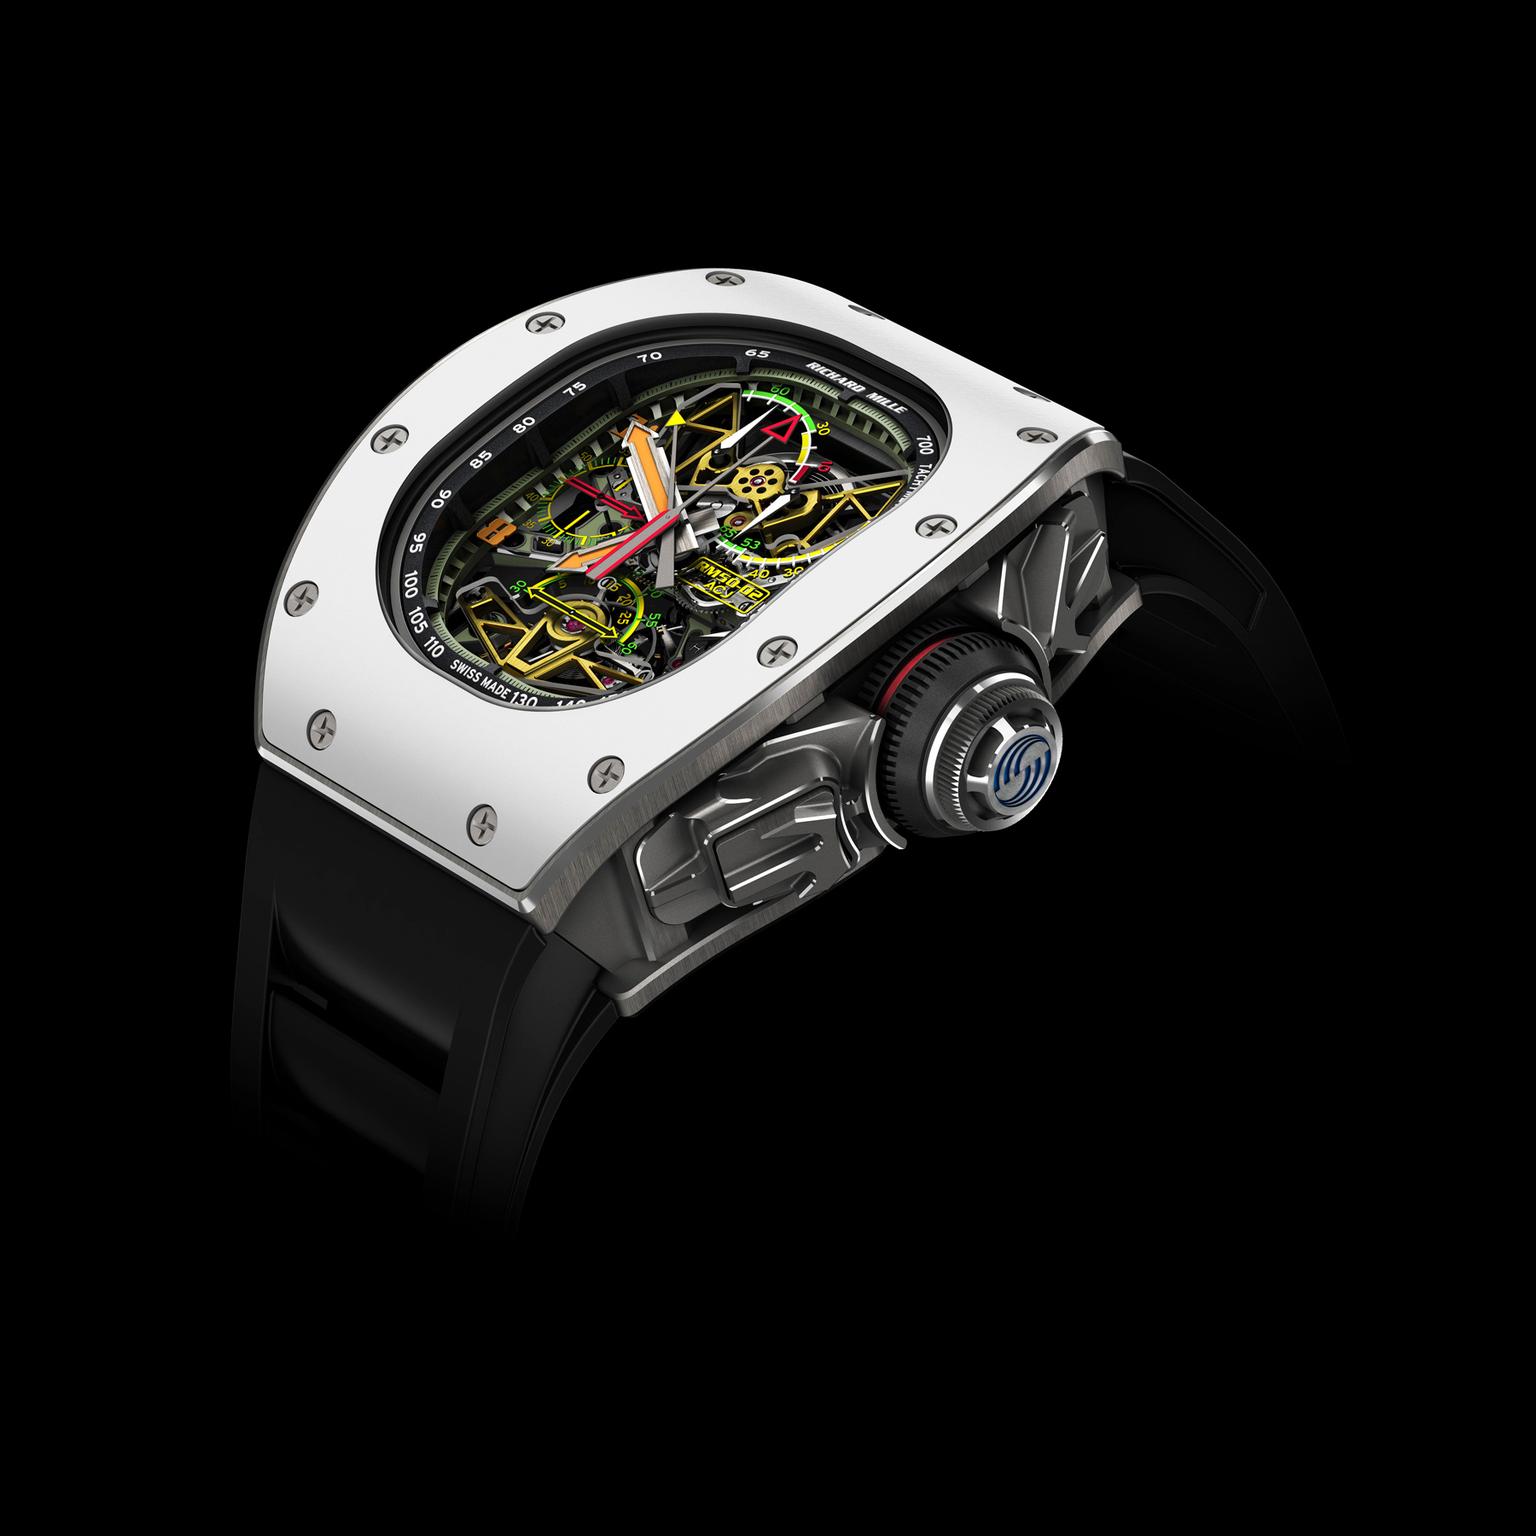 RM 50-02 ACJ Tourbillon Split Seconds Chronograph watch by Richard Mille